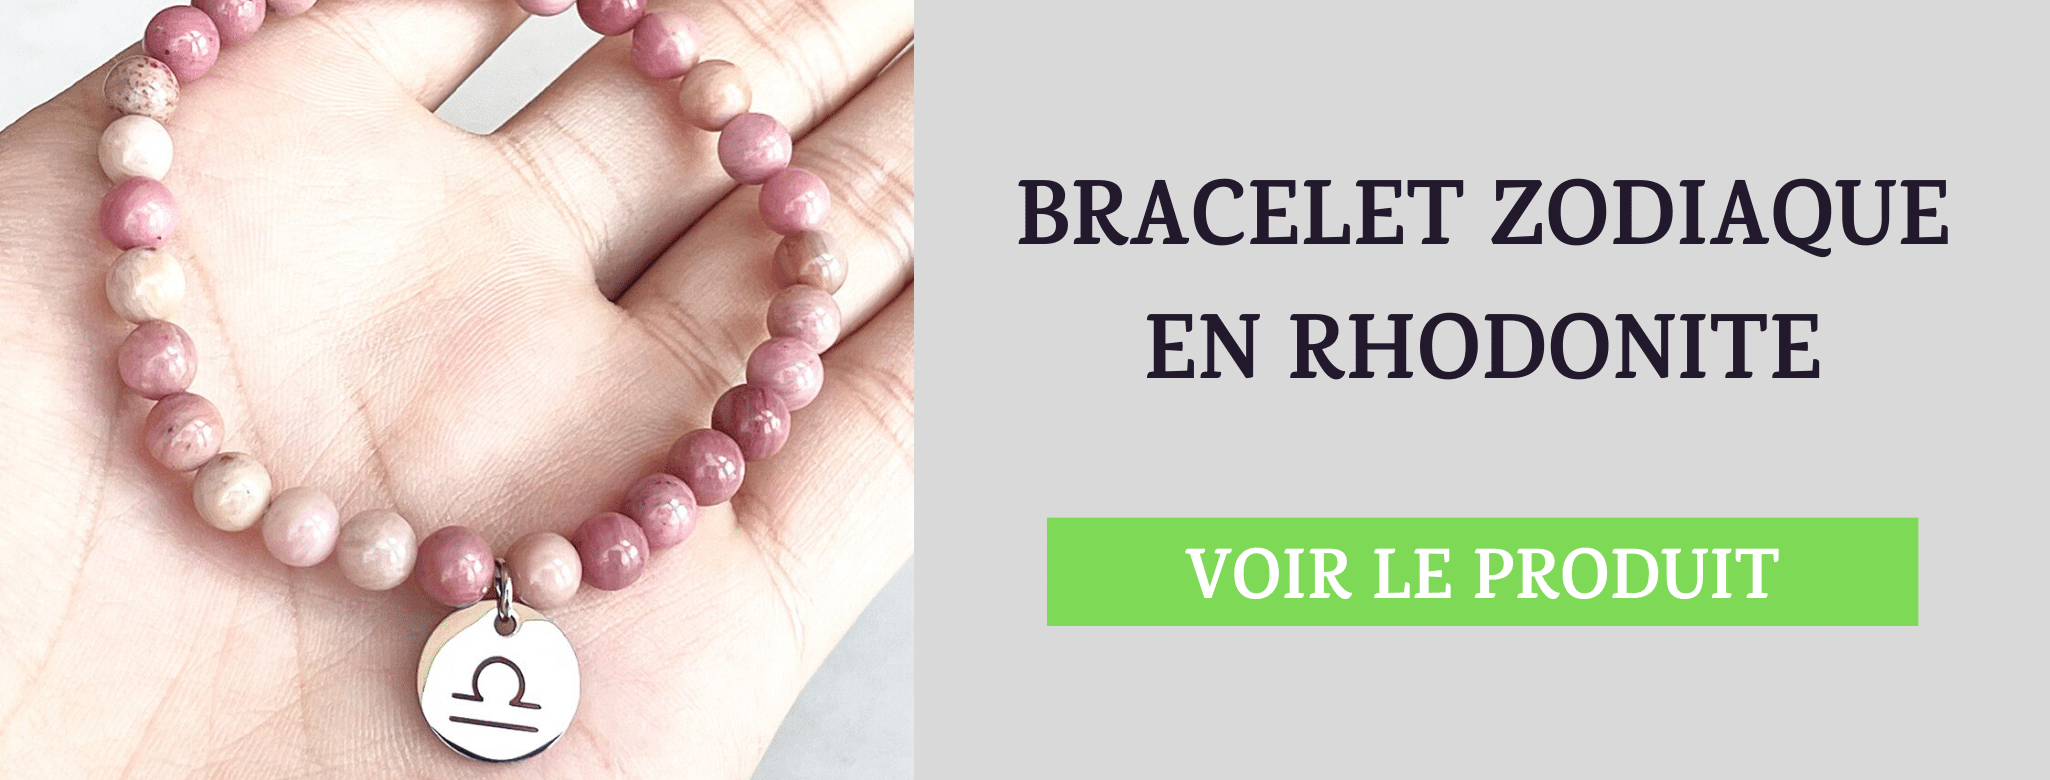 Bracelet Zodiaque Rhodonite